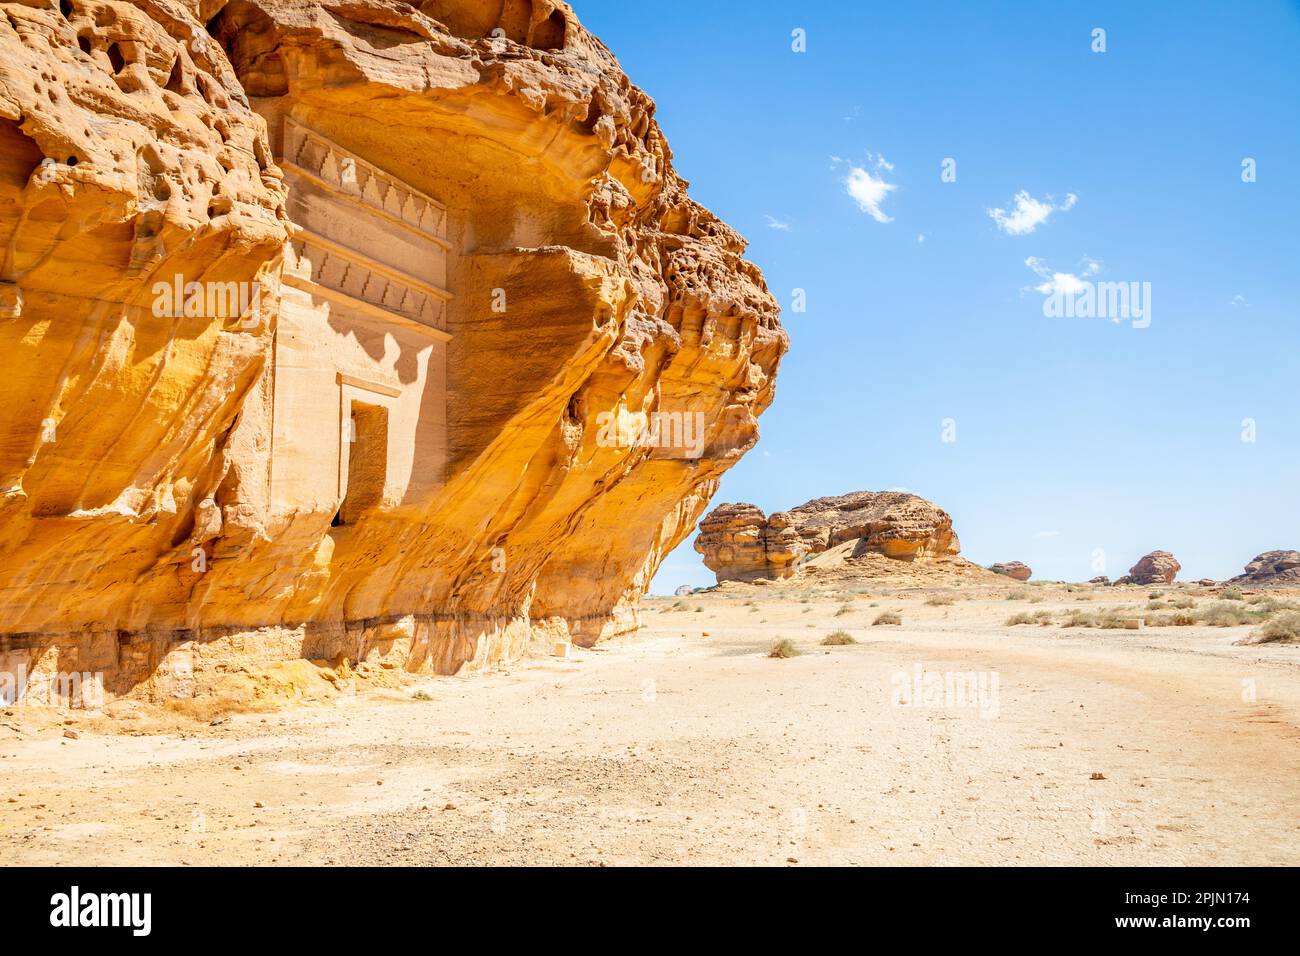 Tombe Jabal al ahmar scolpite in pietra, al Ula, Arabia Saudita Foto Stock